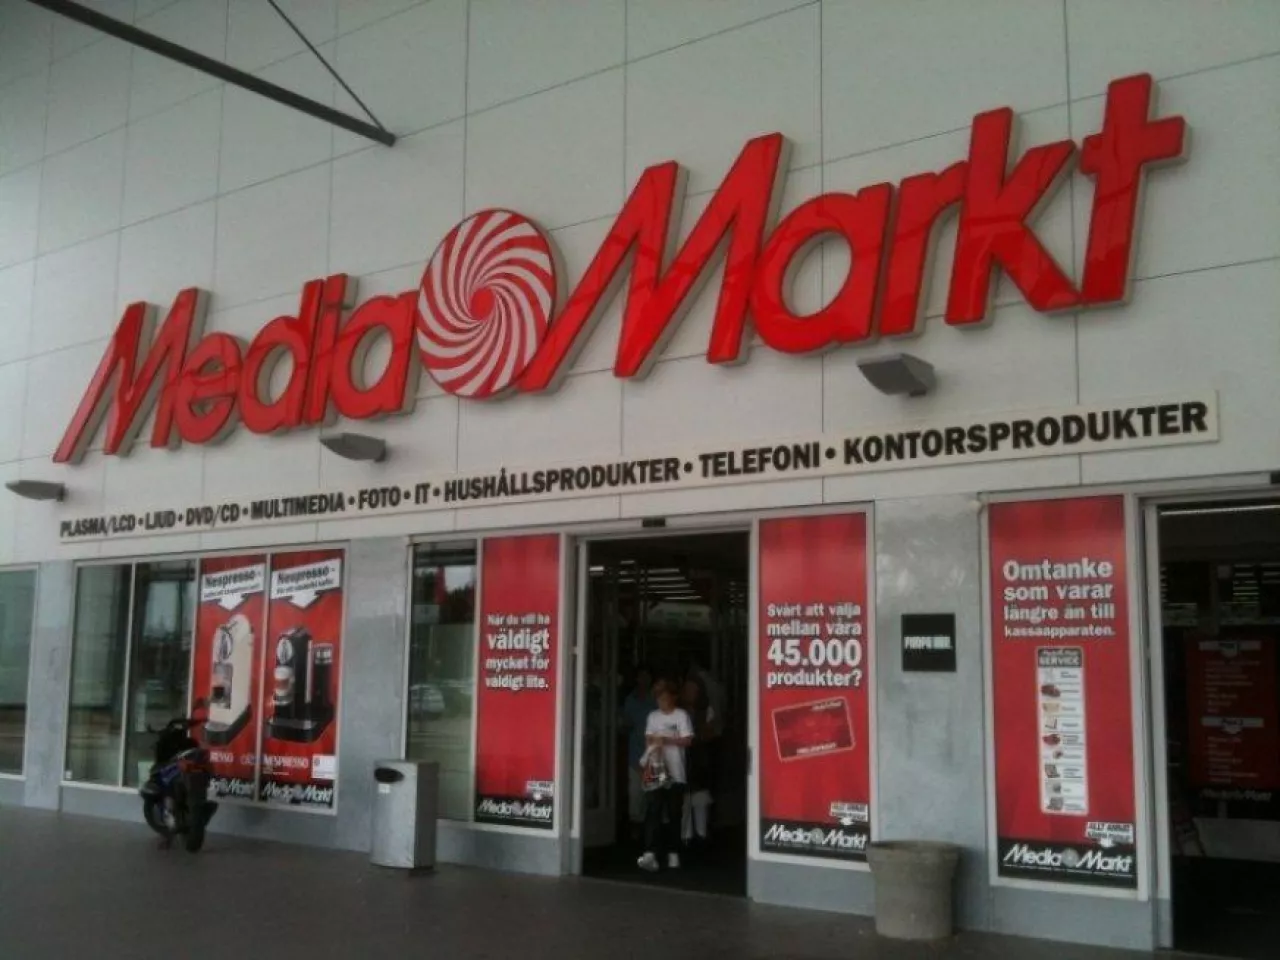 MediaMarkt w centrum handlowym w Göteborgu (fot. By Gaisjonke (Own work) [CC BY 3.0 (http://creativecommons.org/licenses/by/3.0)], via Wikimedia Commons)